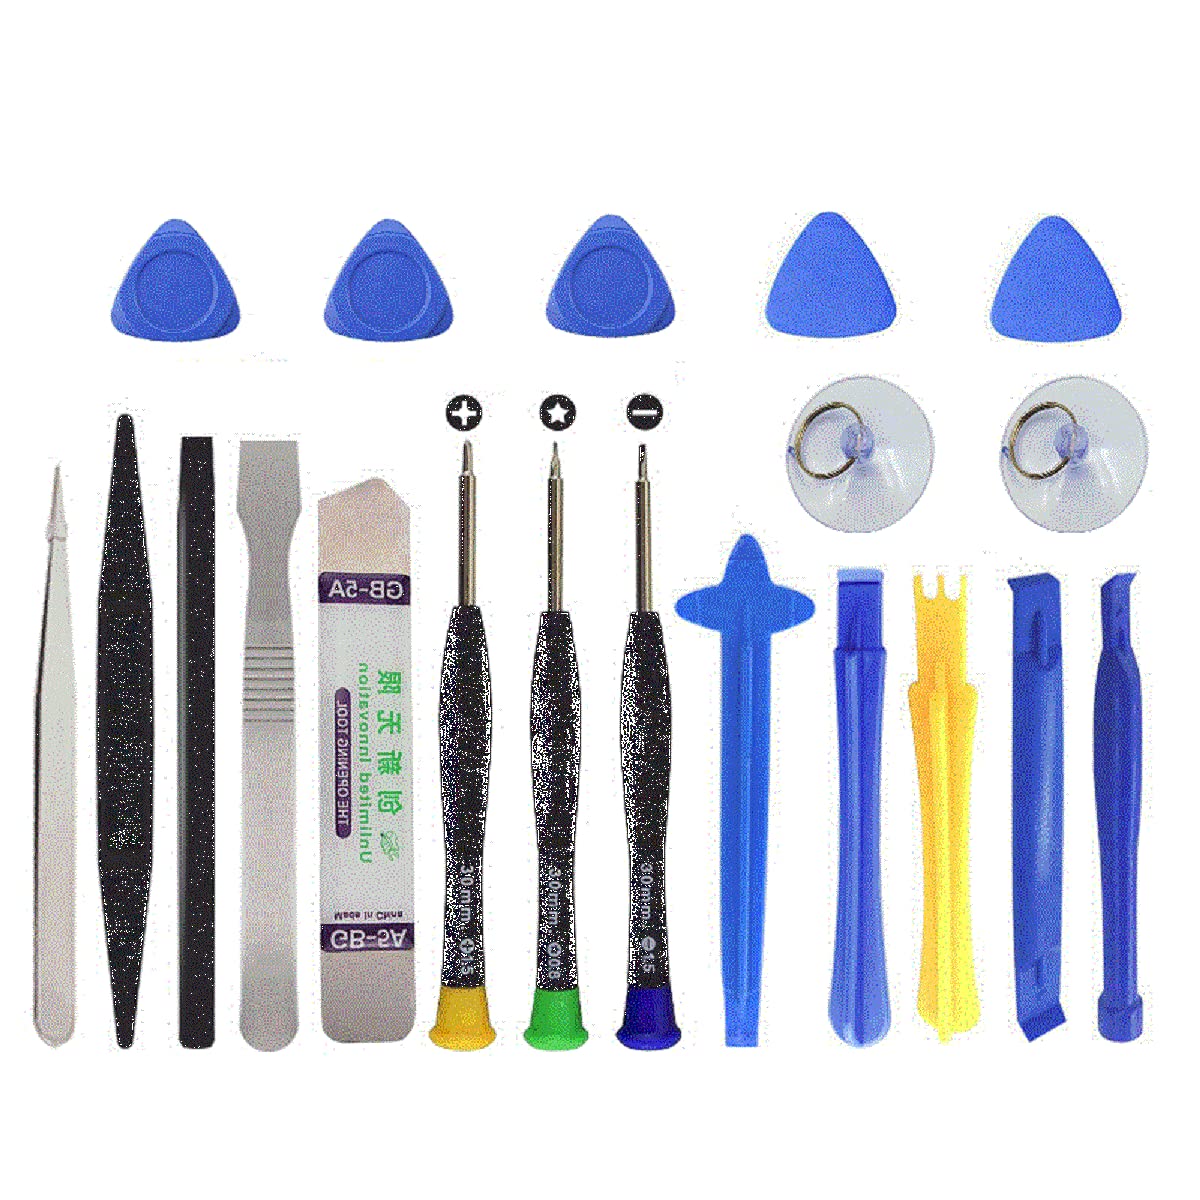 Edinstry Precision Small Repair Tools Kit